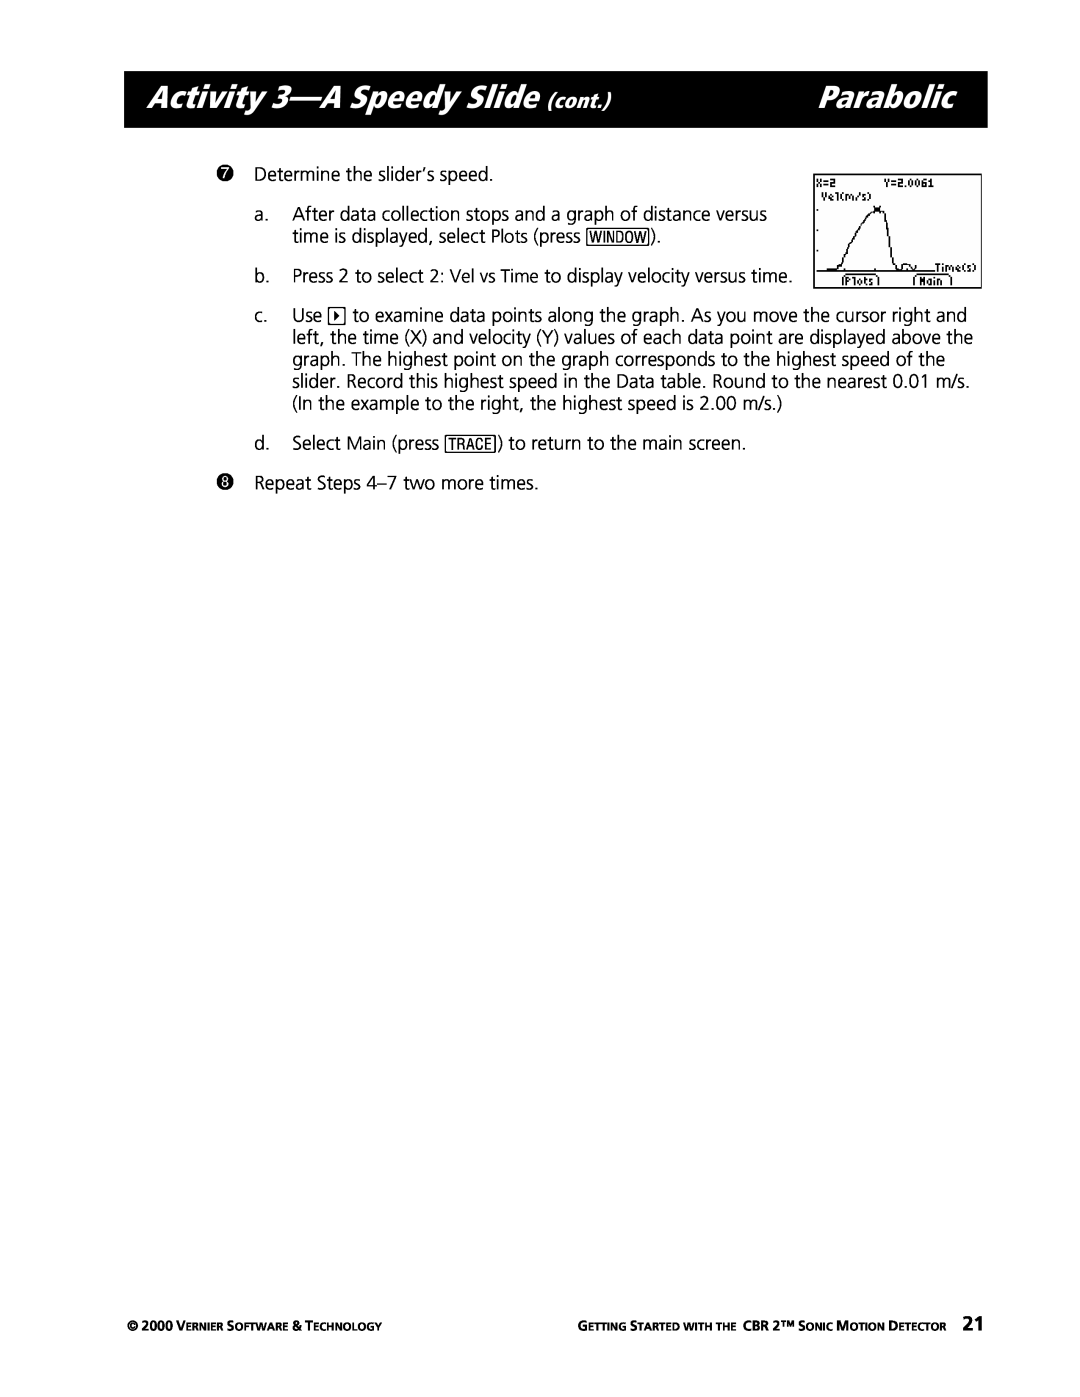 Texas Instruments CBR 2 manual Activity 3-ASpeedy Slide cont, Parabolic, ÐDetermine the slider’s speed 